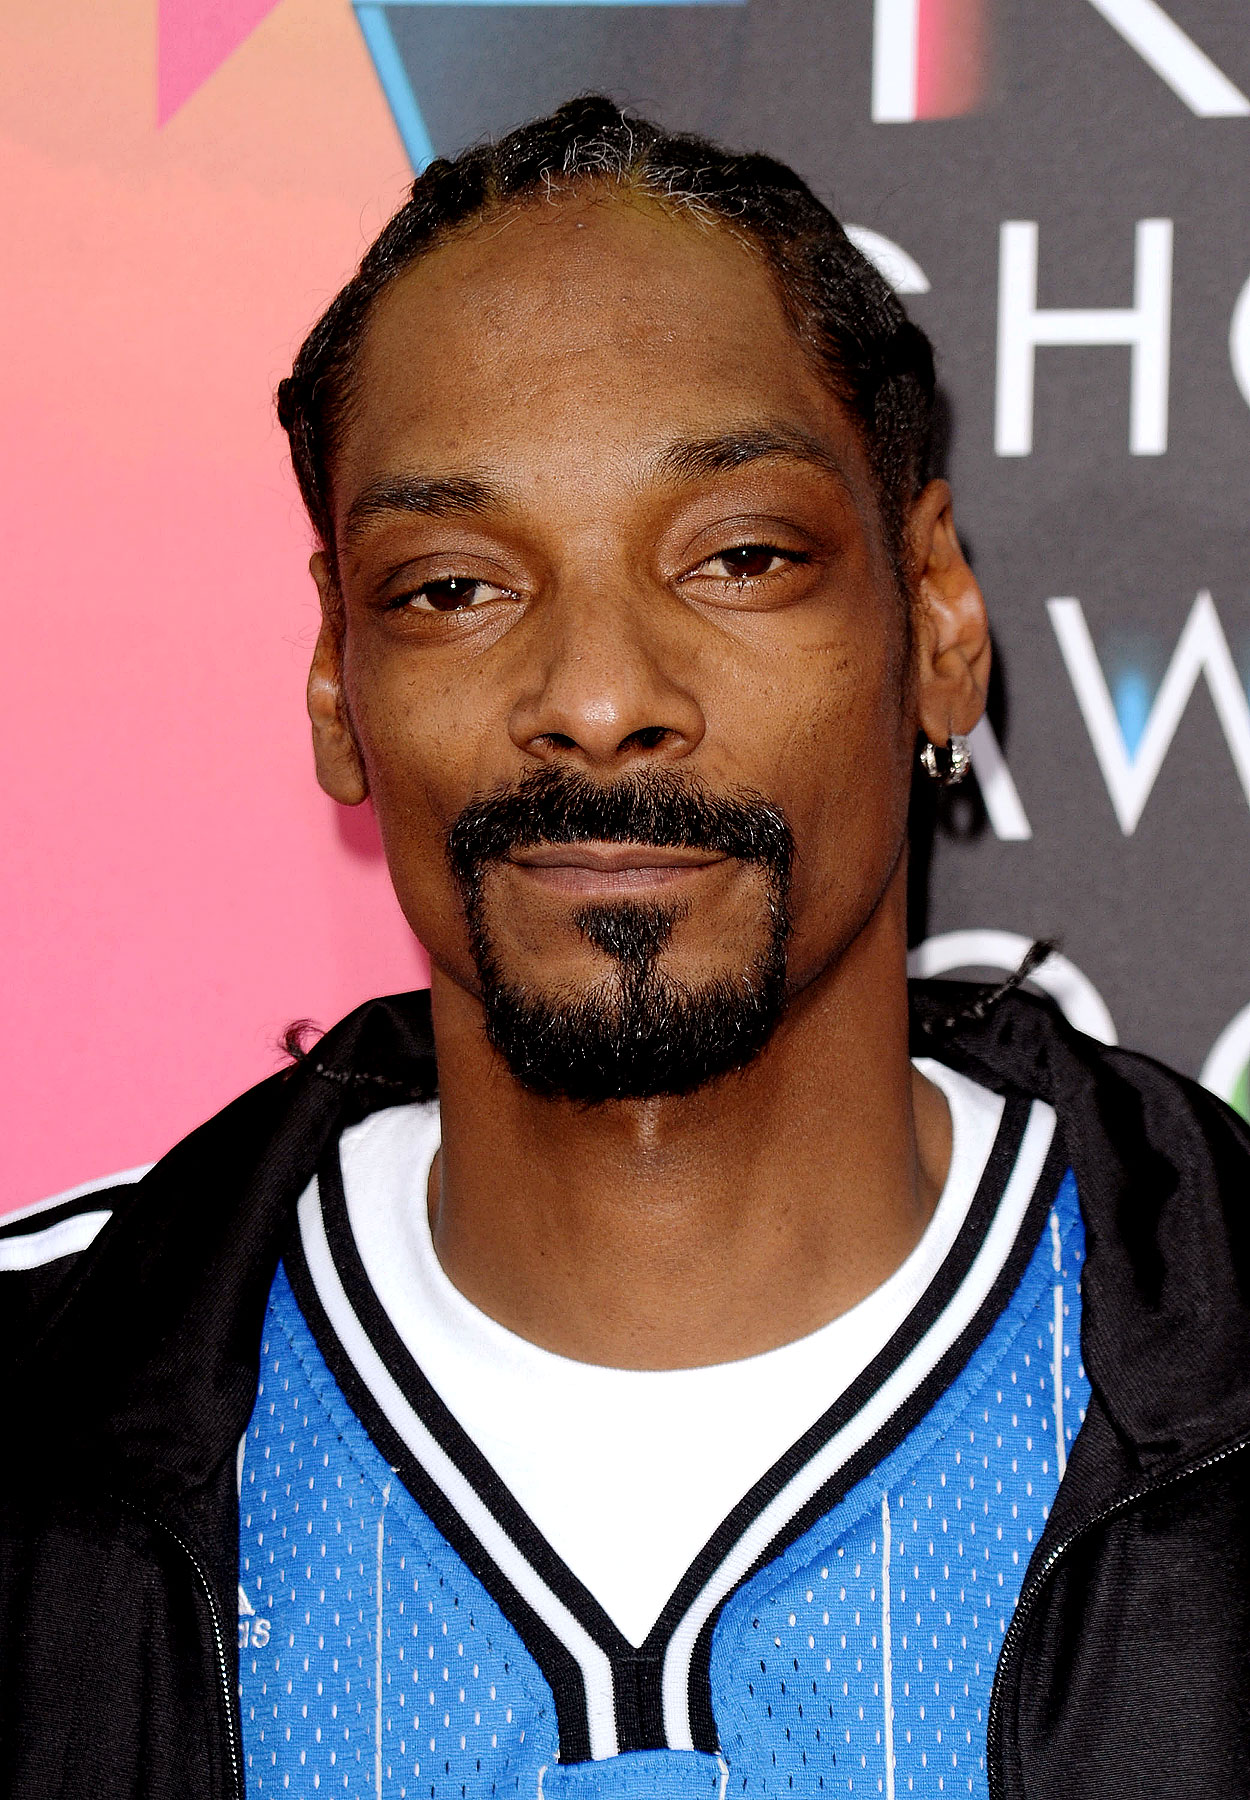 Snoop Dogg photo 64 of 79 pics, wallpaper - photo #246823 - ThePlace2